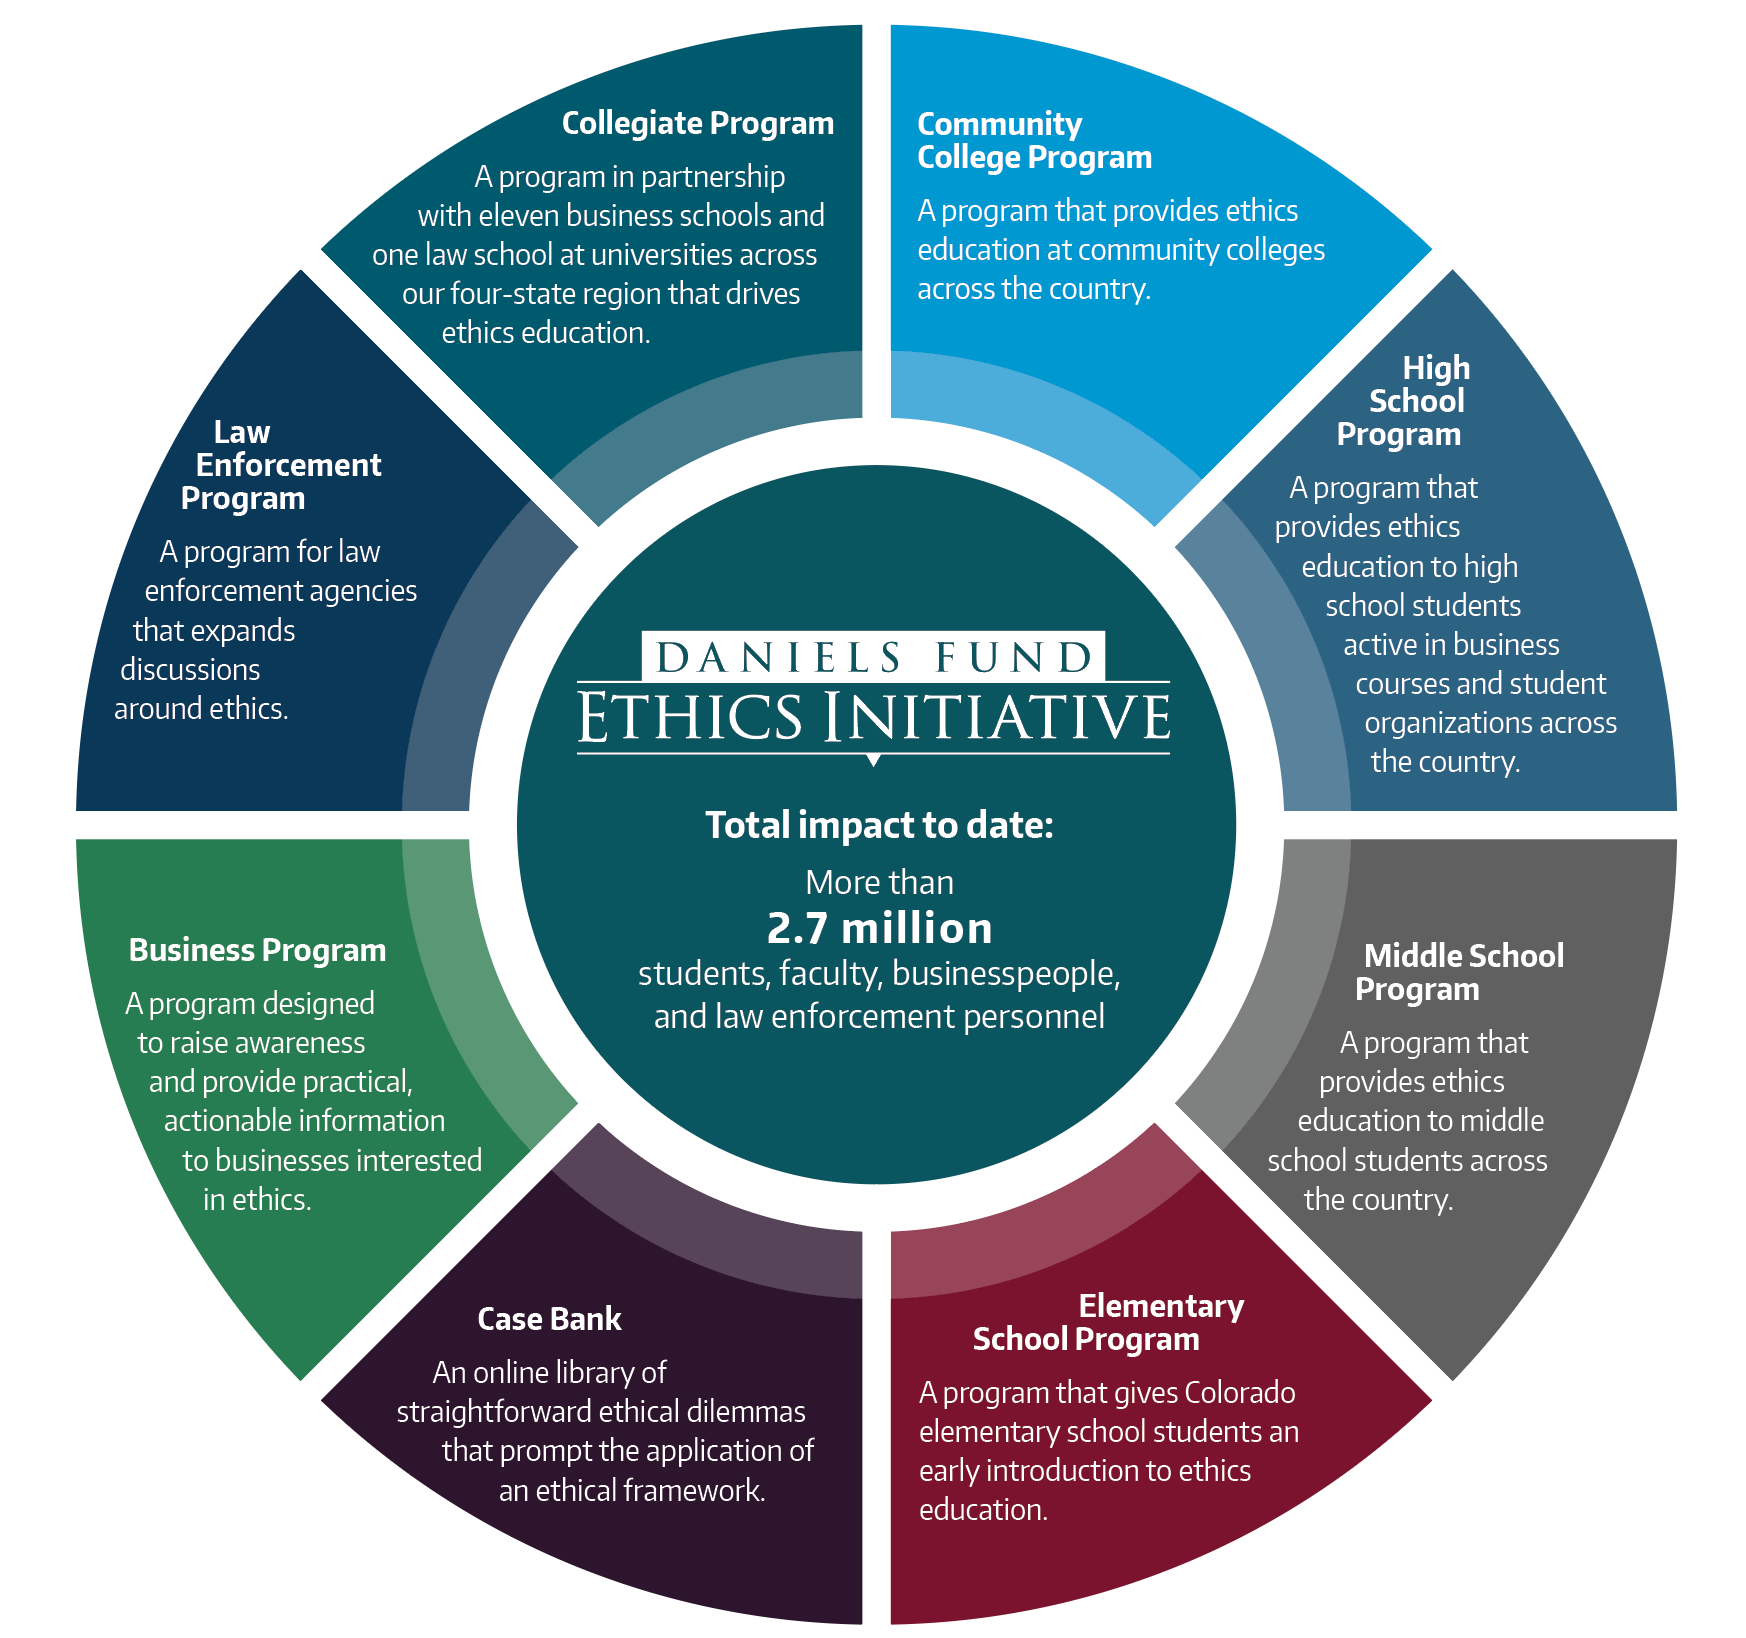 Ethics Initiative Chart - Collegiate Program, Community College Program, High School Program, Middle School Program, Elementary School Program, Law Enforcement Program, Business Program, and Case Bank